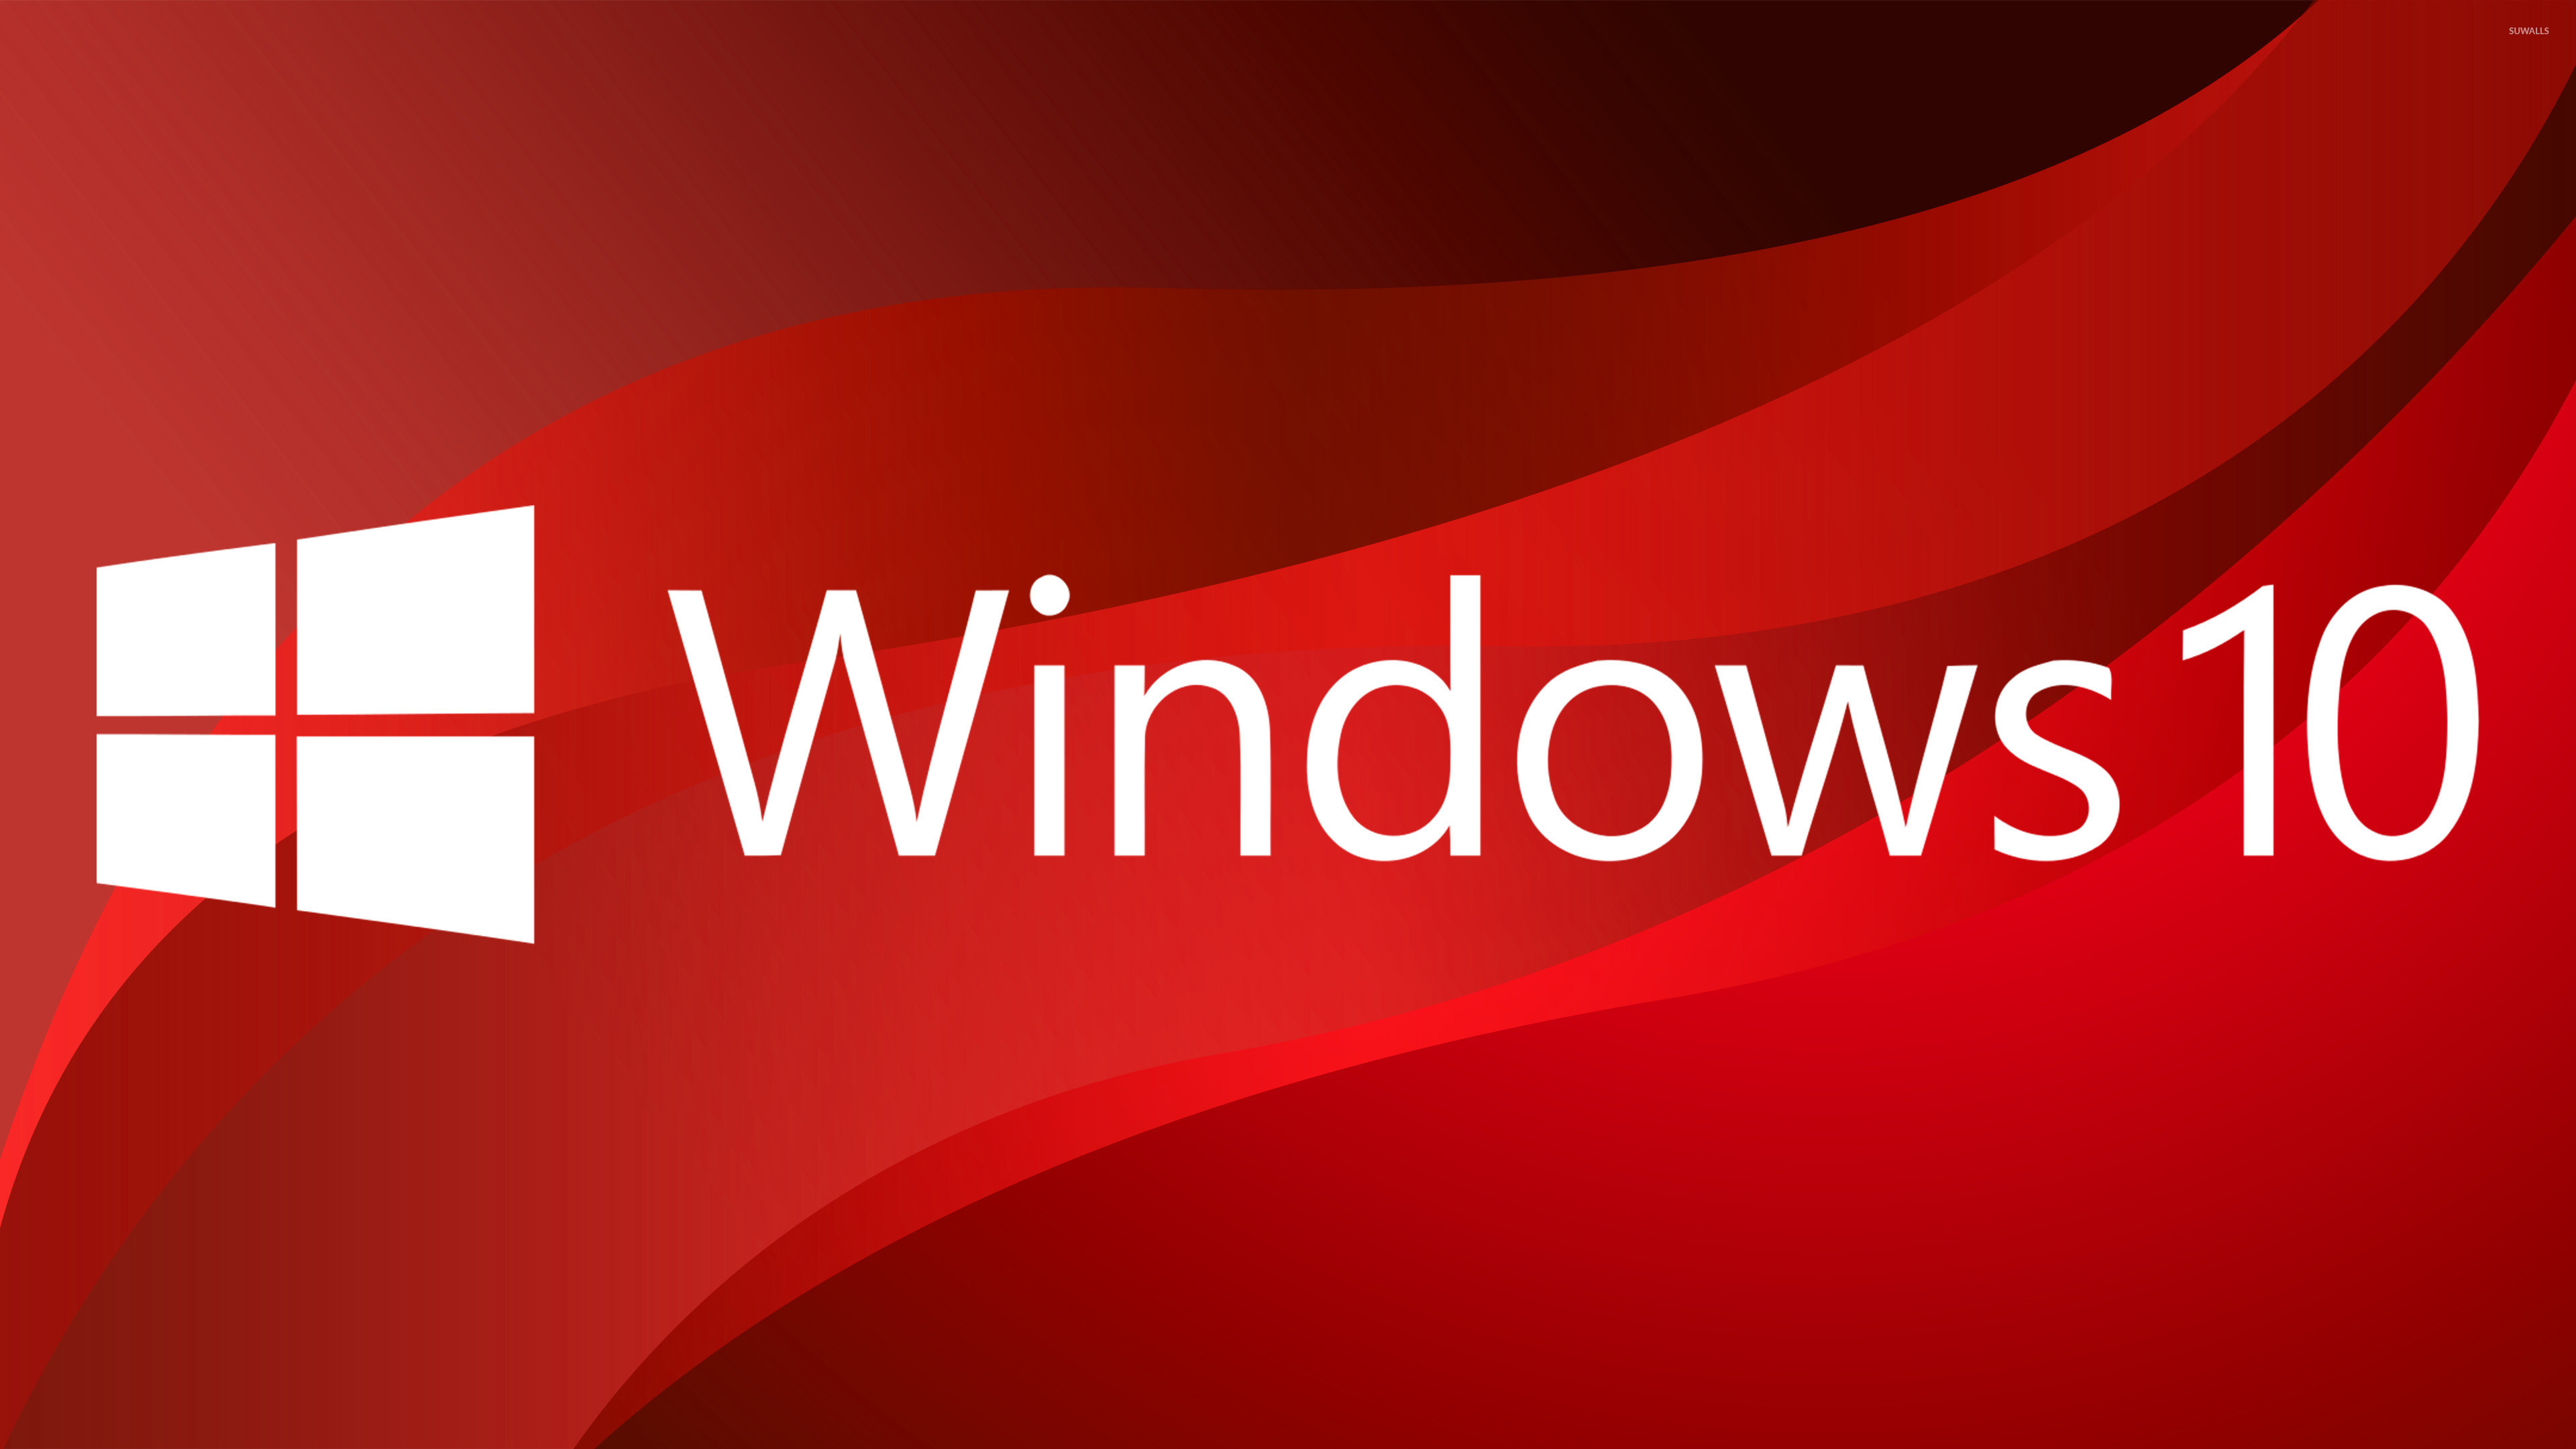 3840x2160 Windows 10 big white logo on red curves wallpaper